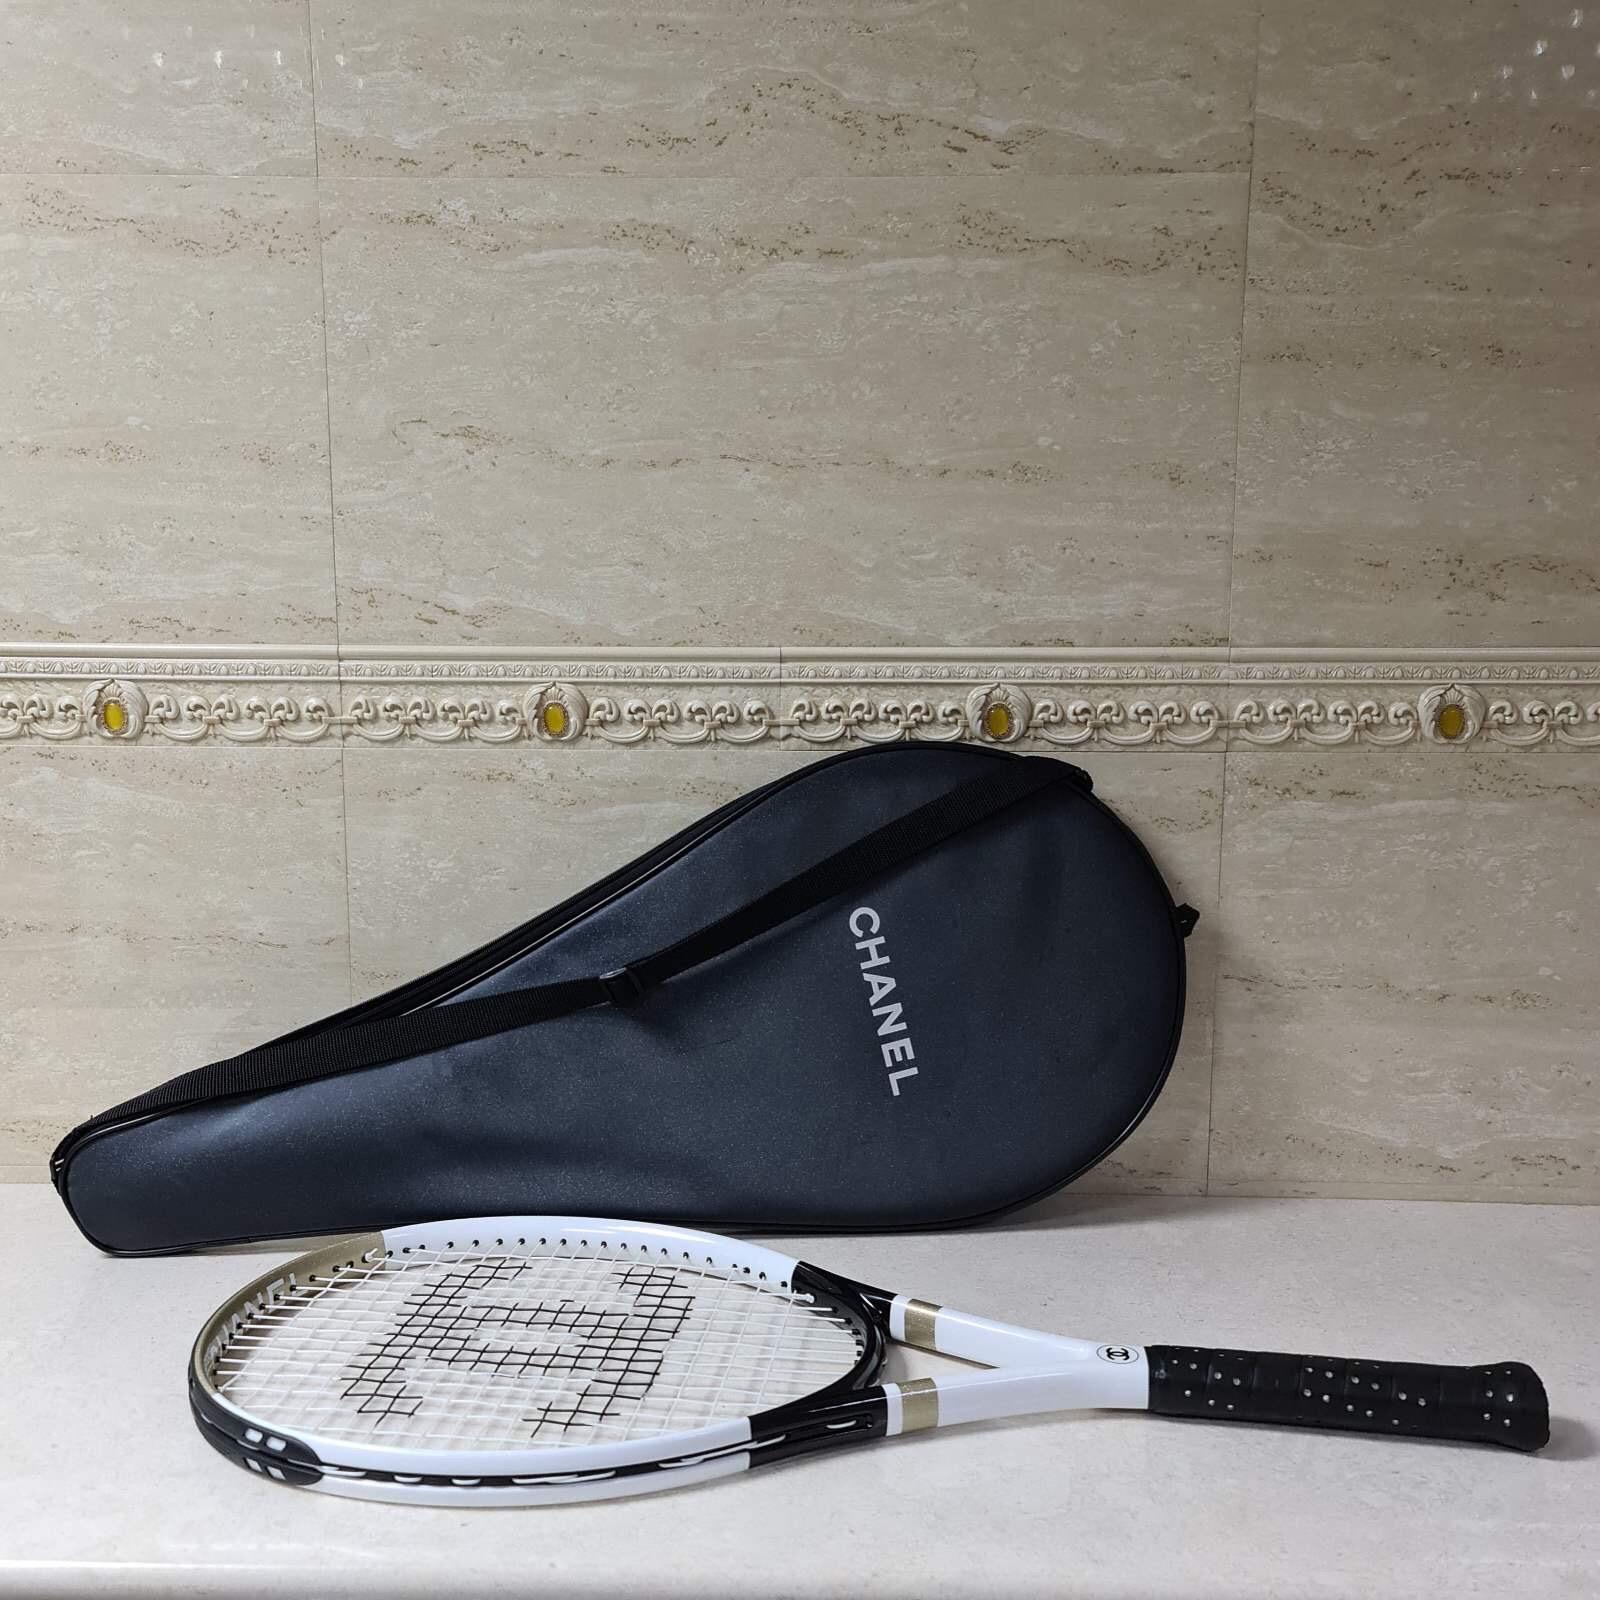 designer tennis racket